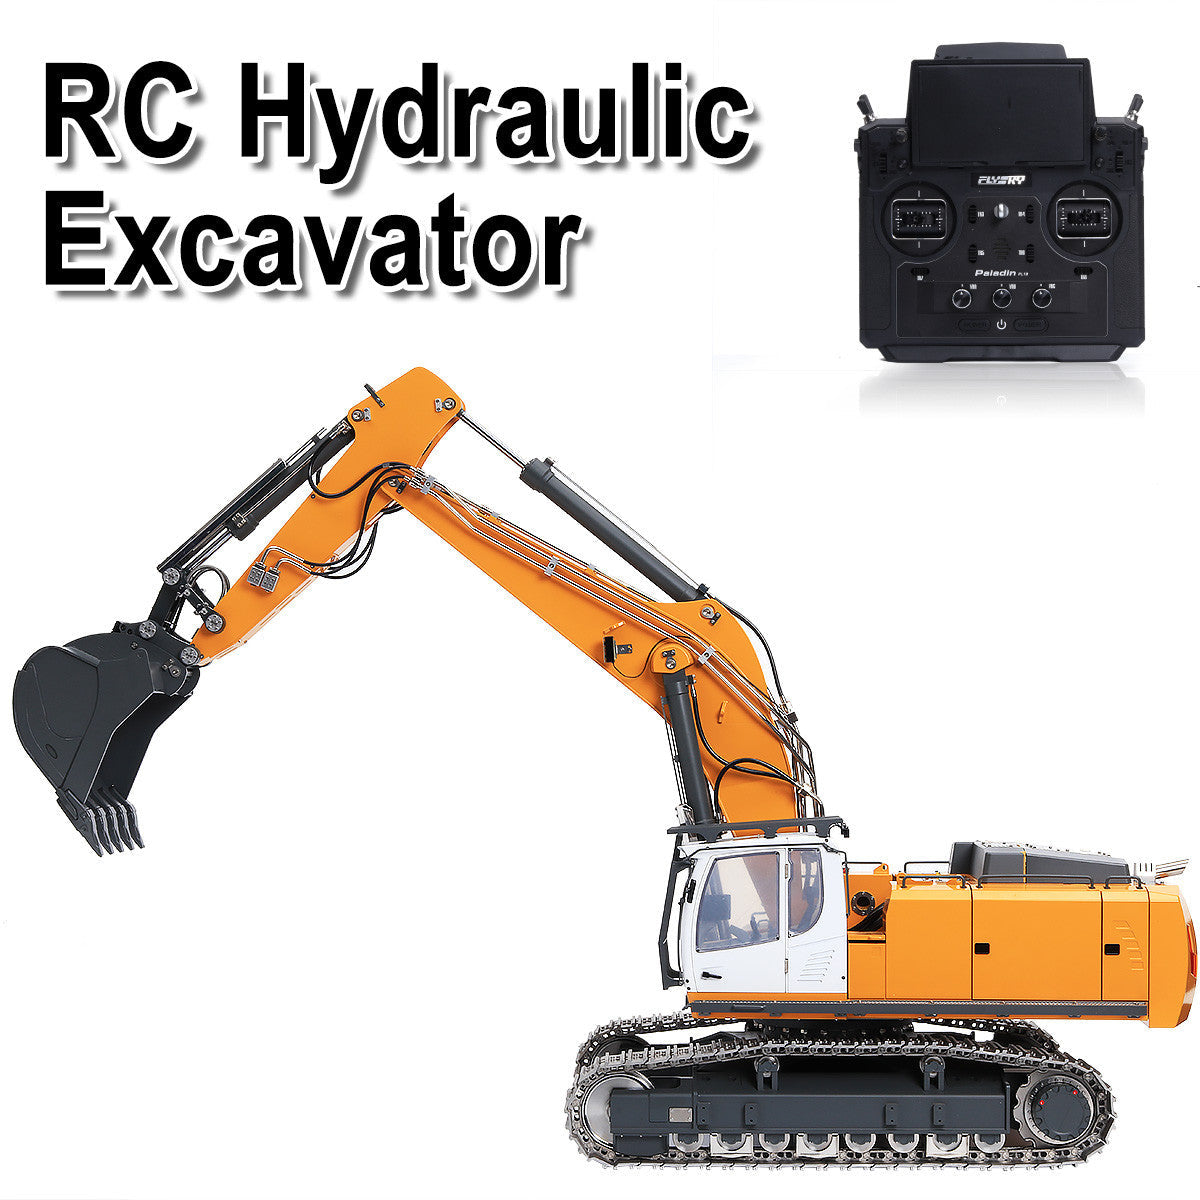 Huina Kabolite 970 Full Alloy Excavator Simulation Hydraulic Excavator RC Car High Quality Toy Gift